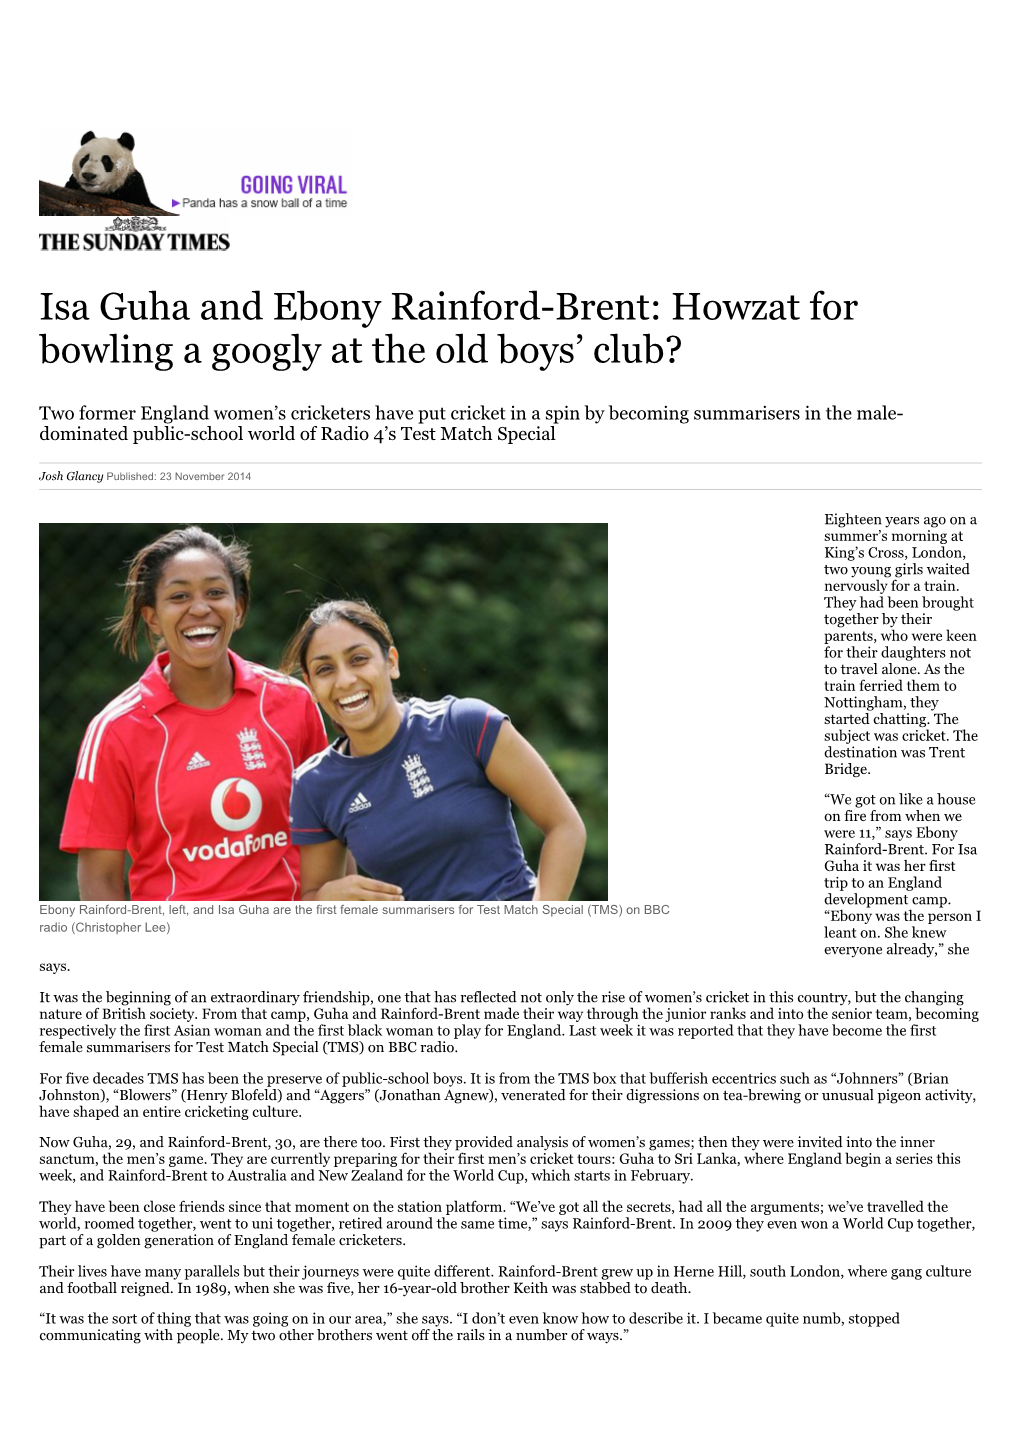 Isa Guha and Ebony Rainford-Brent: Howzat for Bowling a Googly at the Old Boys’ Club?